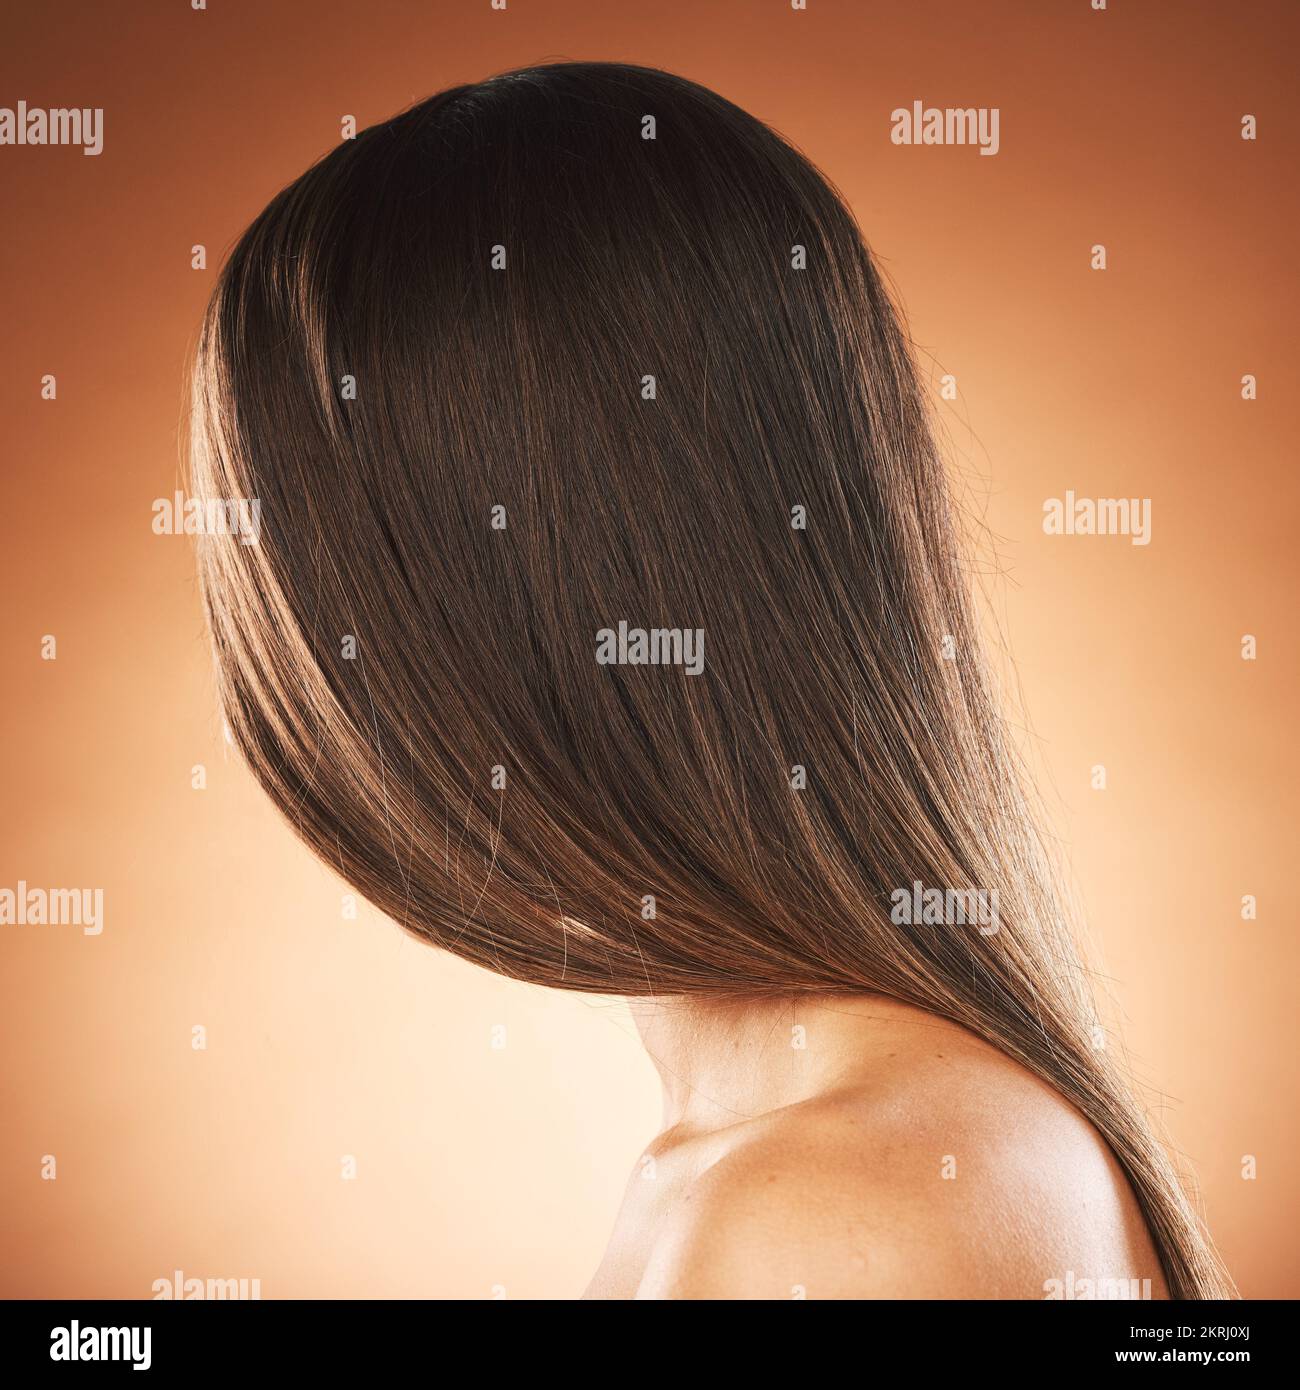 Woman, texture or hair style on orange studio background in keratin treatment marketing, Brazilian straightening advertising or self care. Model Stock Photo